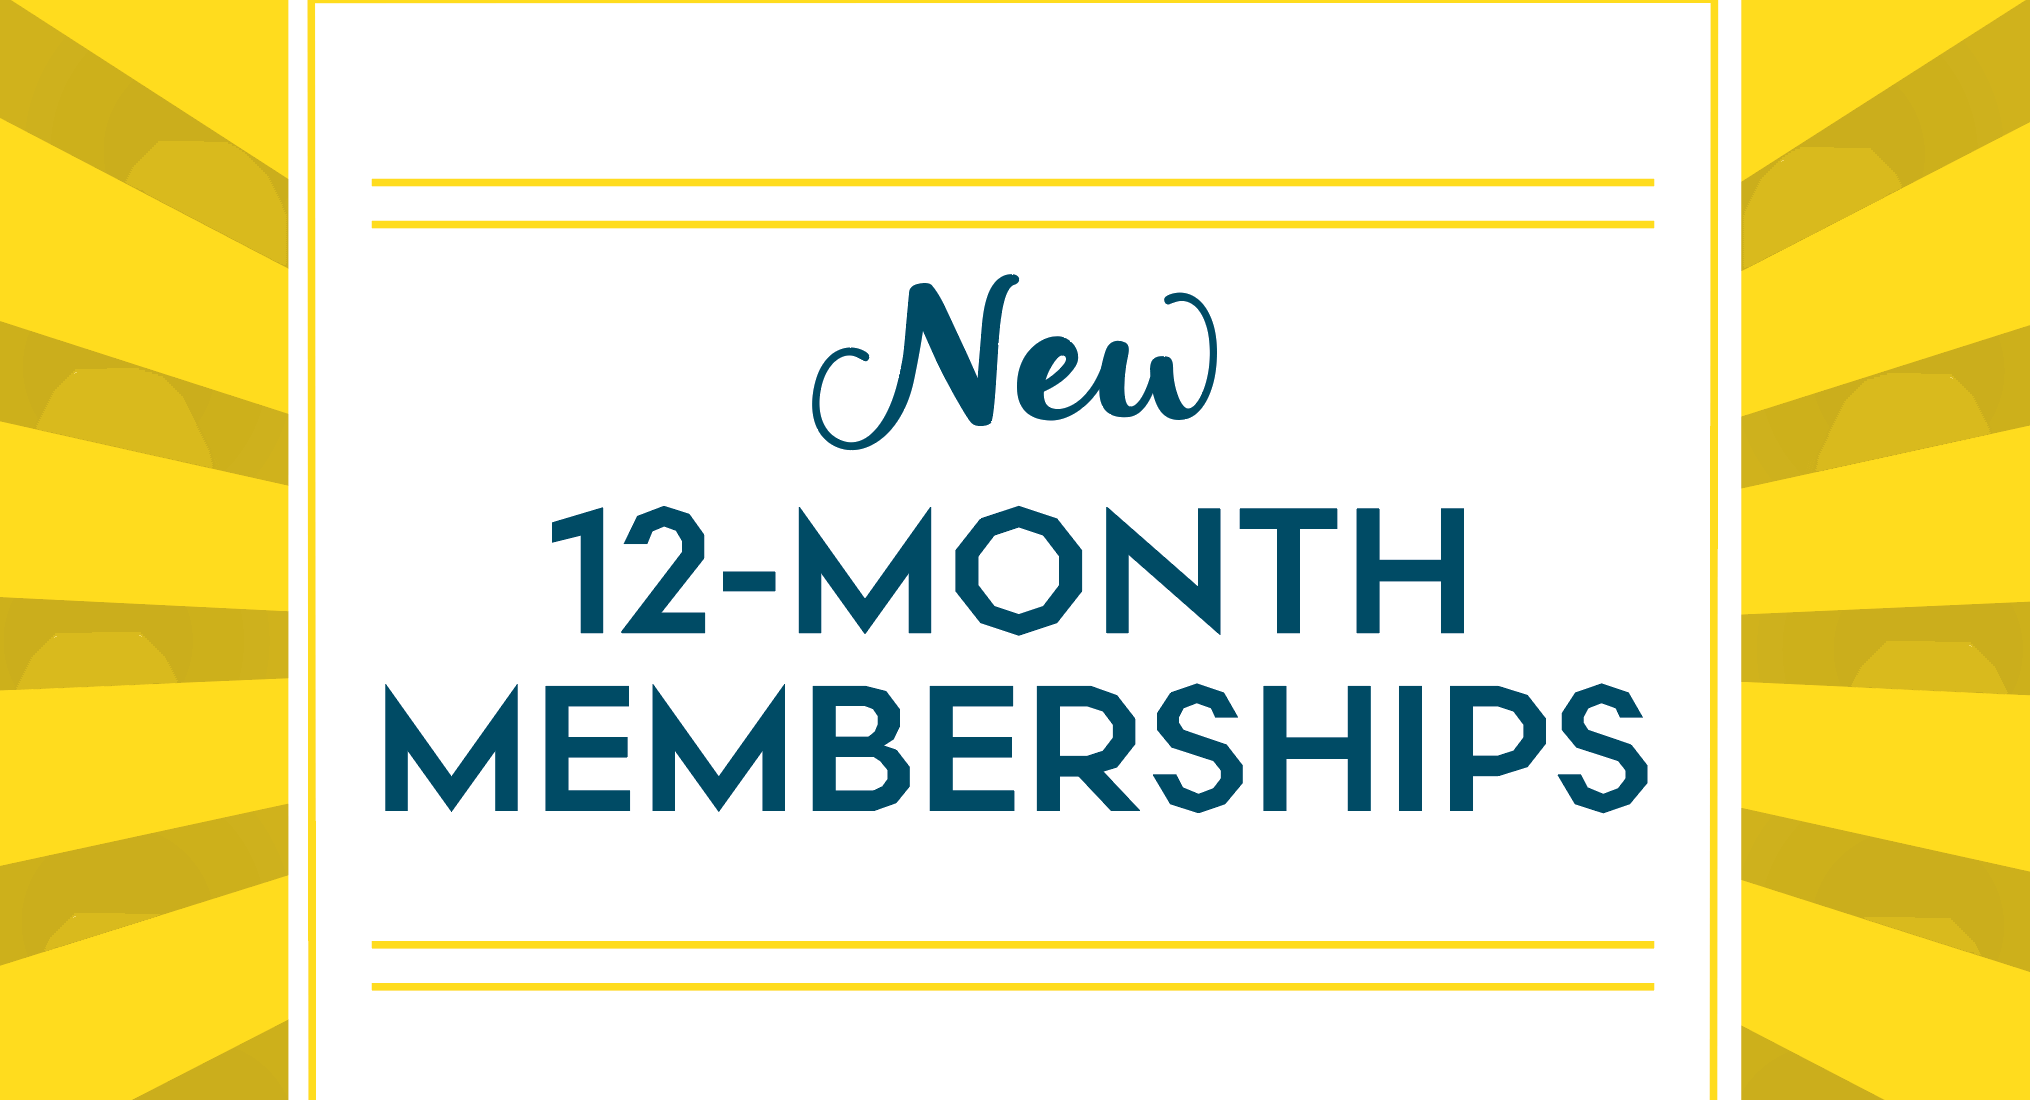 New! Annual Memberships